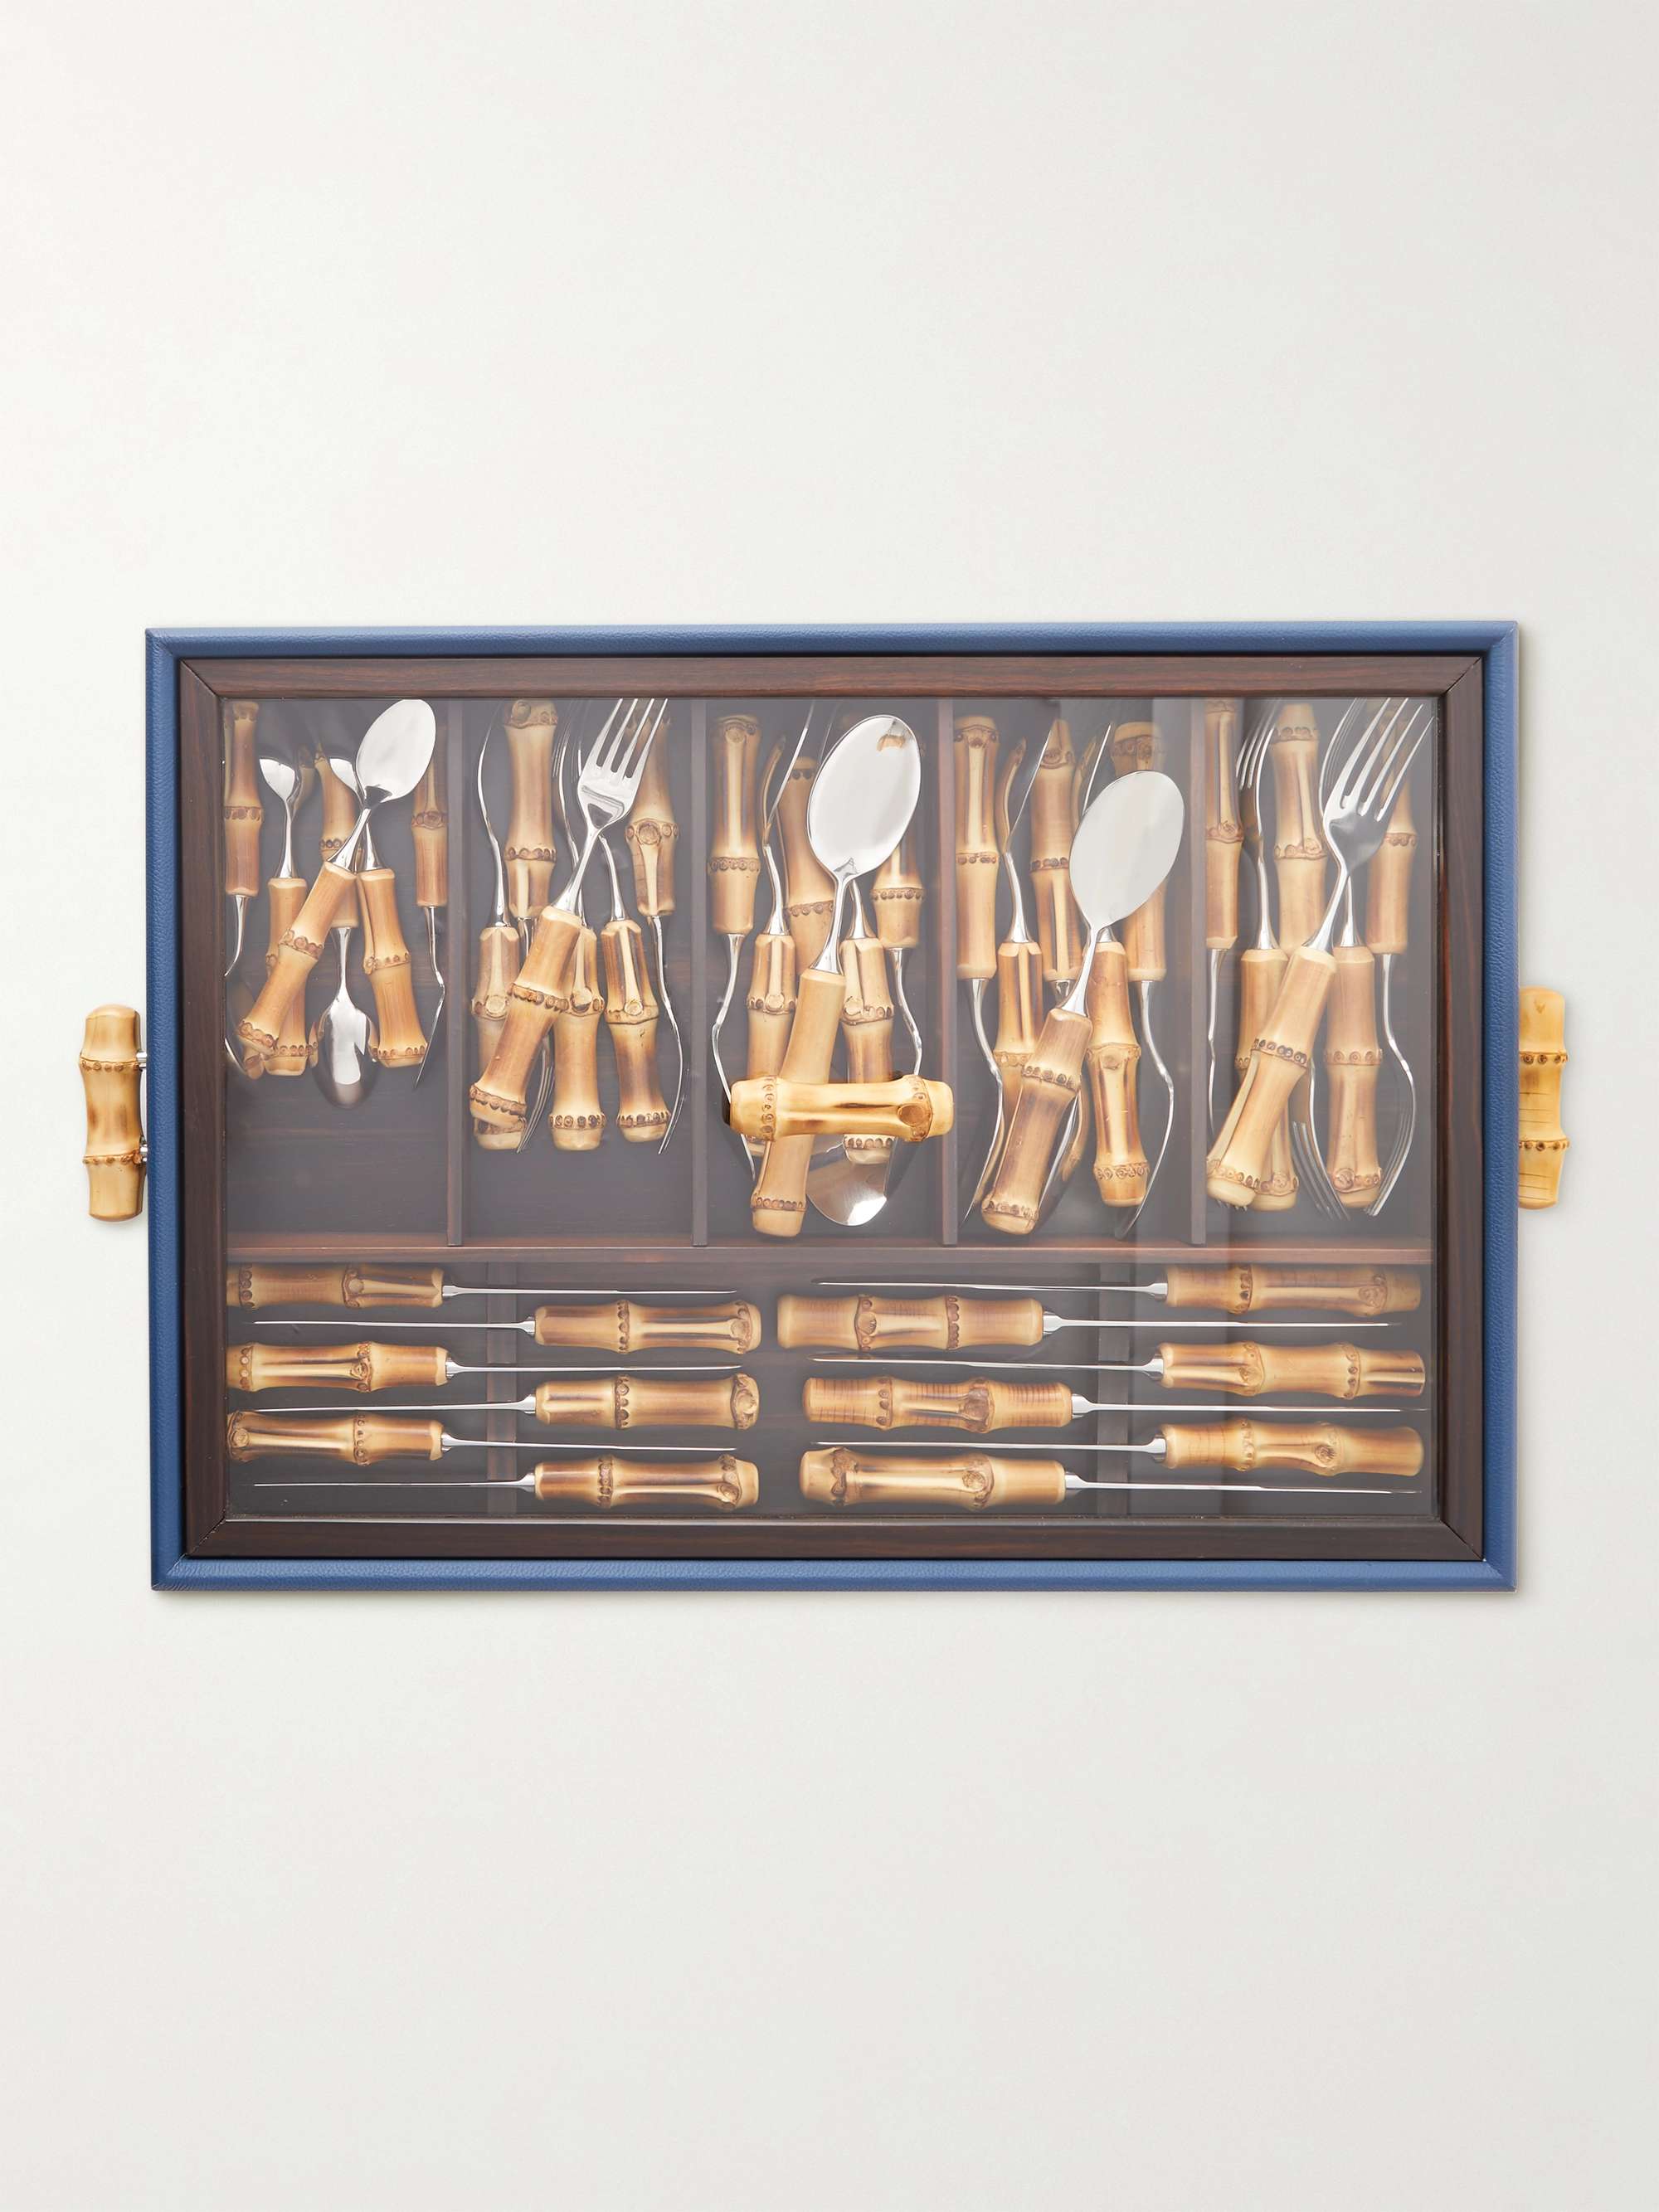 LORENZI MILANO Chrome-Plated, Bamboo, Leather and Wood Tableware Set